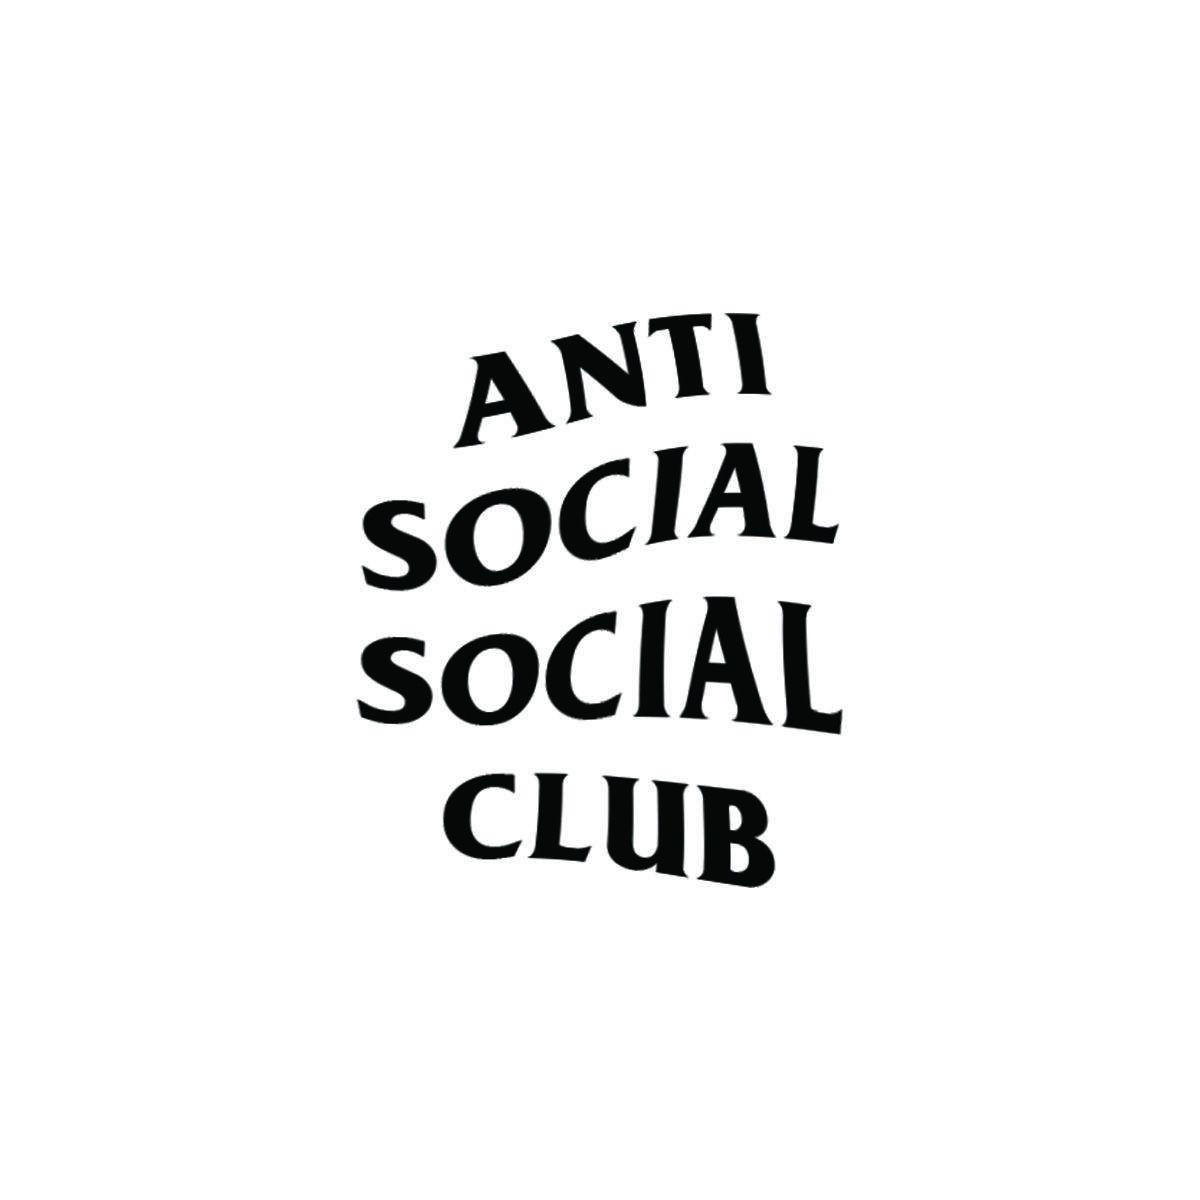 ANTI SOCIAL SOCIAL CLUB. wallpaper. Anti social social